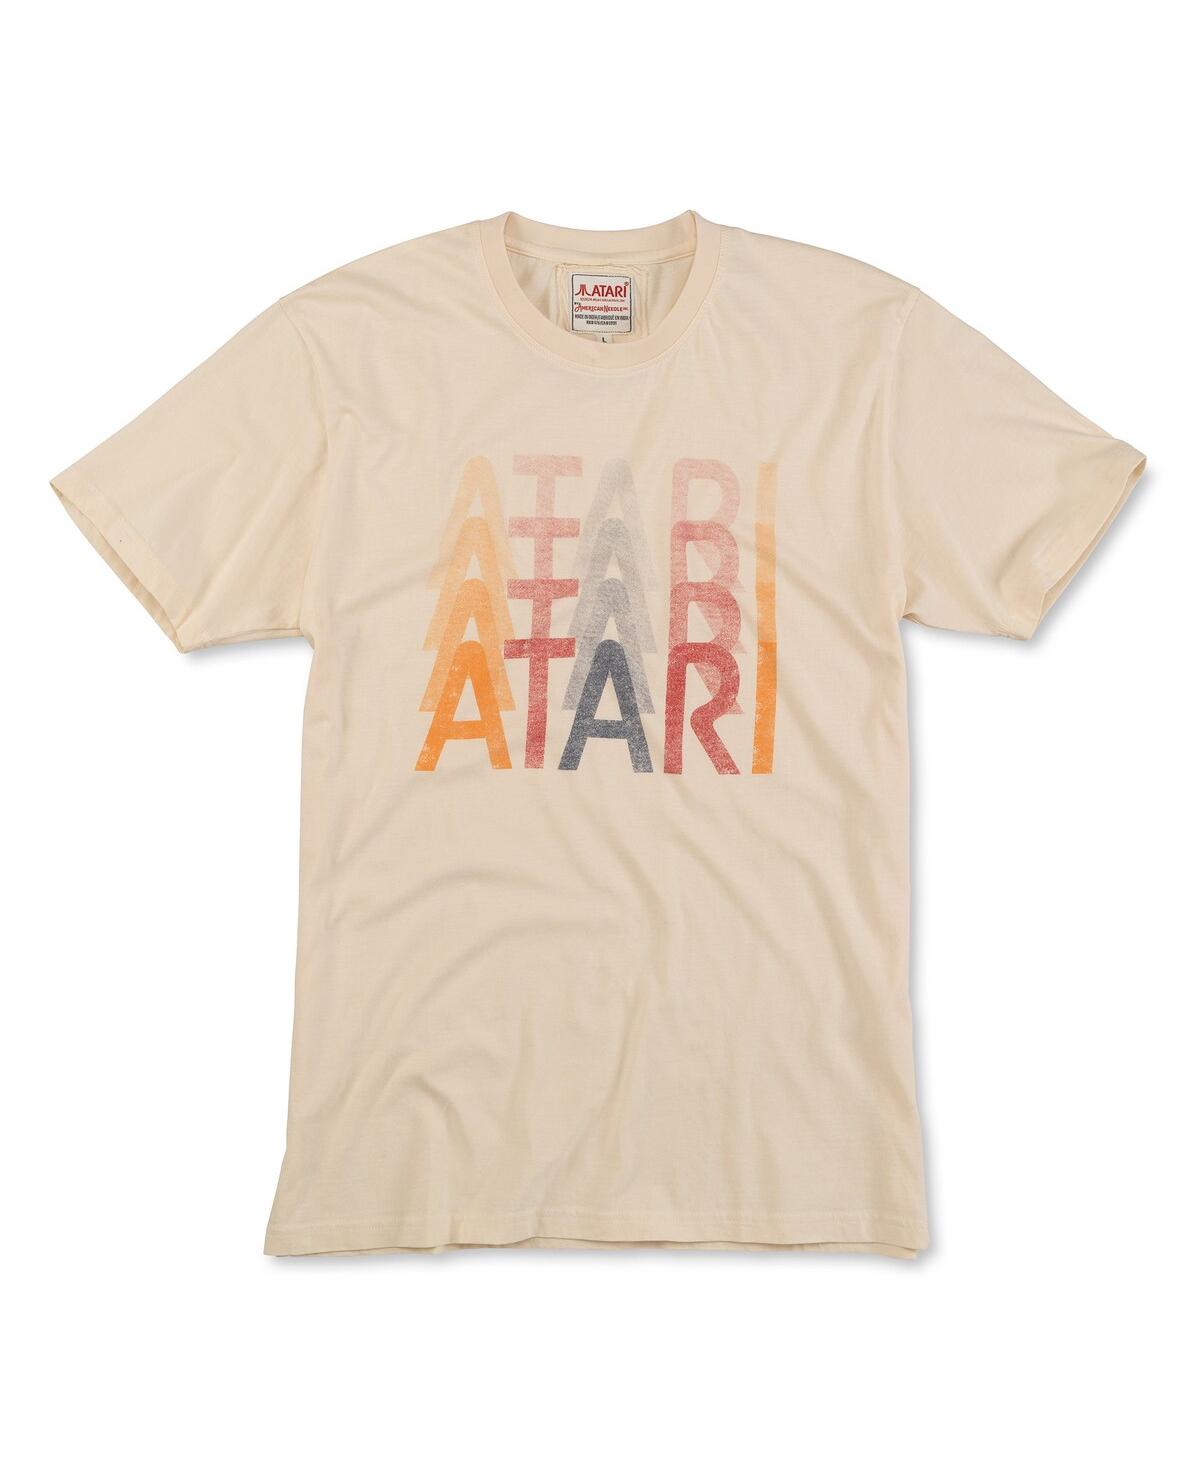 Men's and Women's American Needle Cream Distressed Atari Vintage-Like Fade T-shirt - Cream